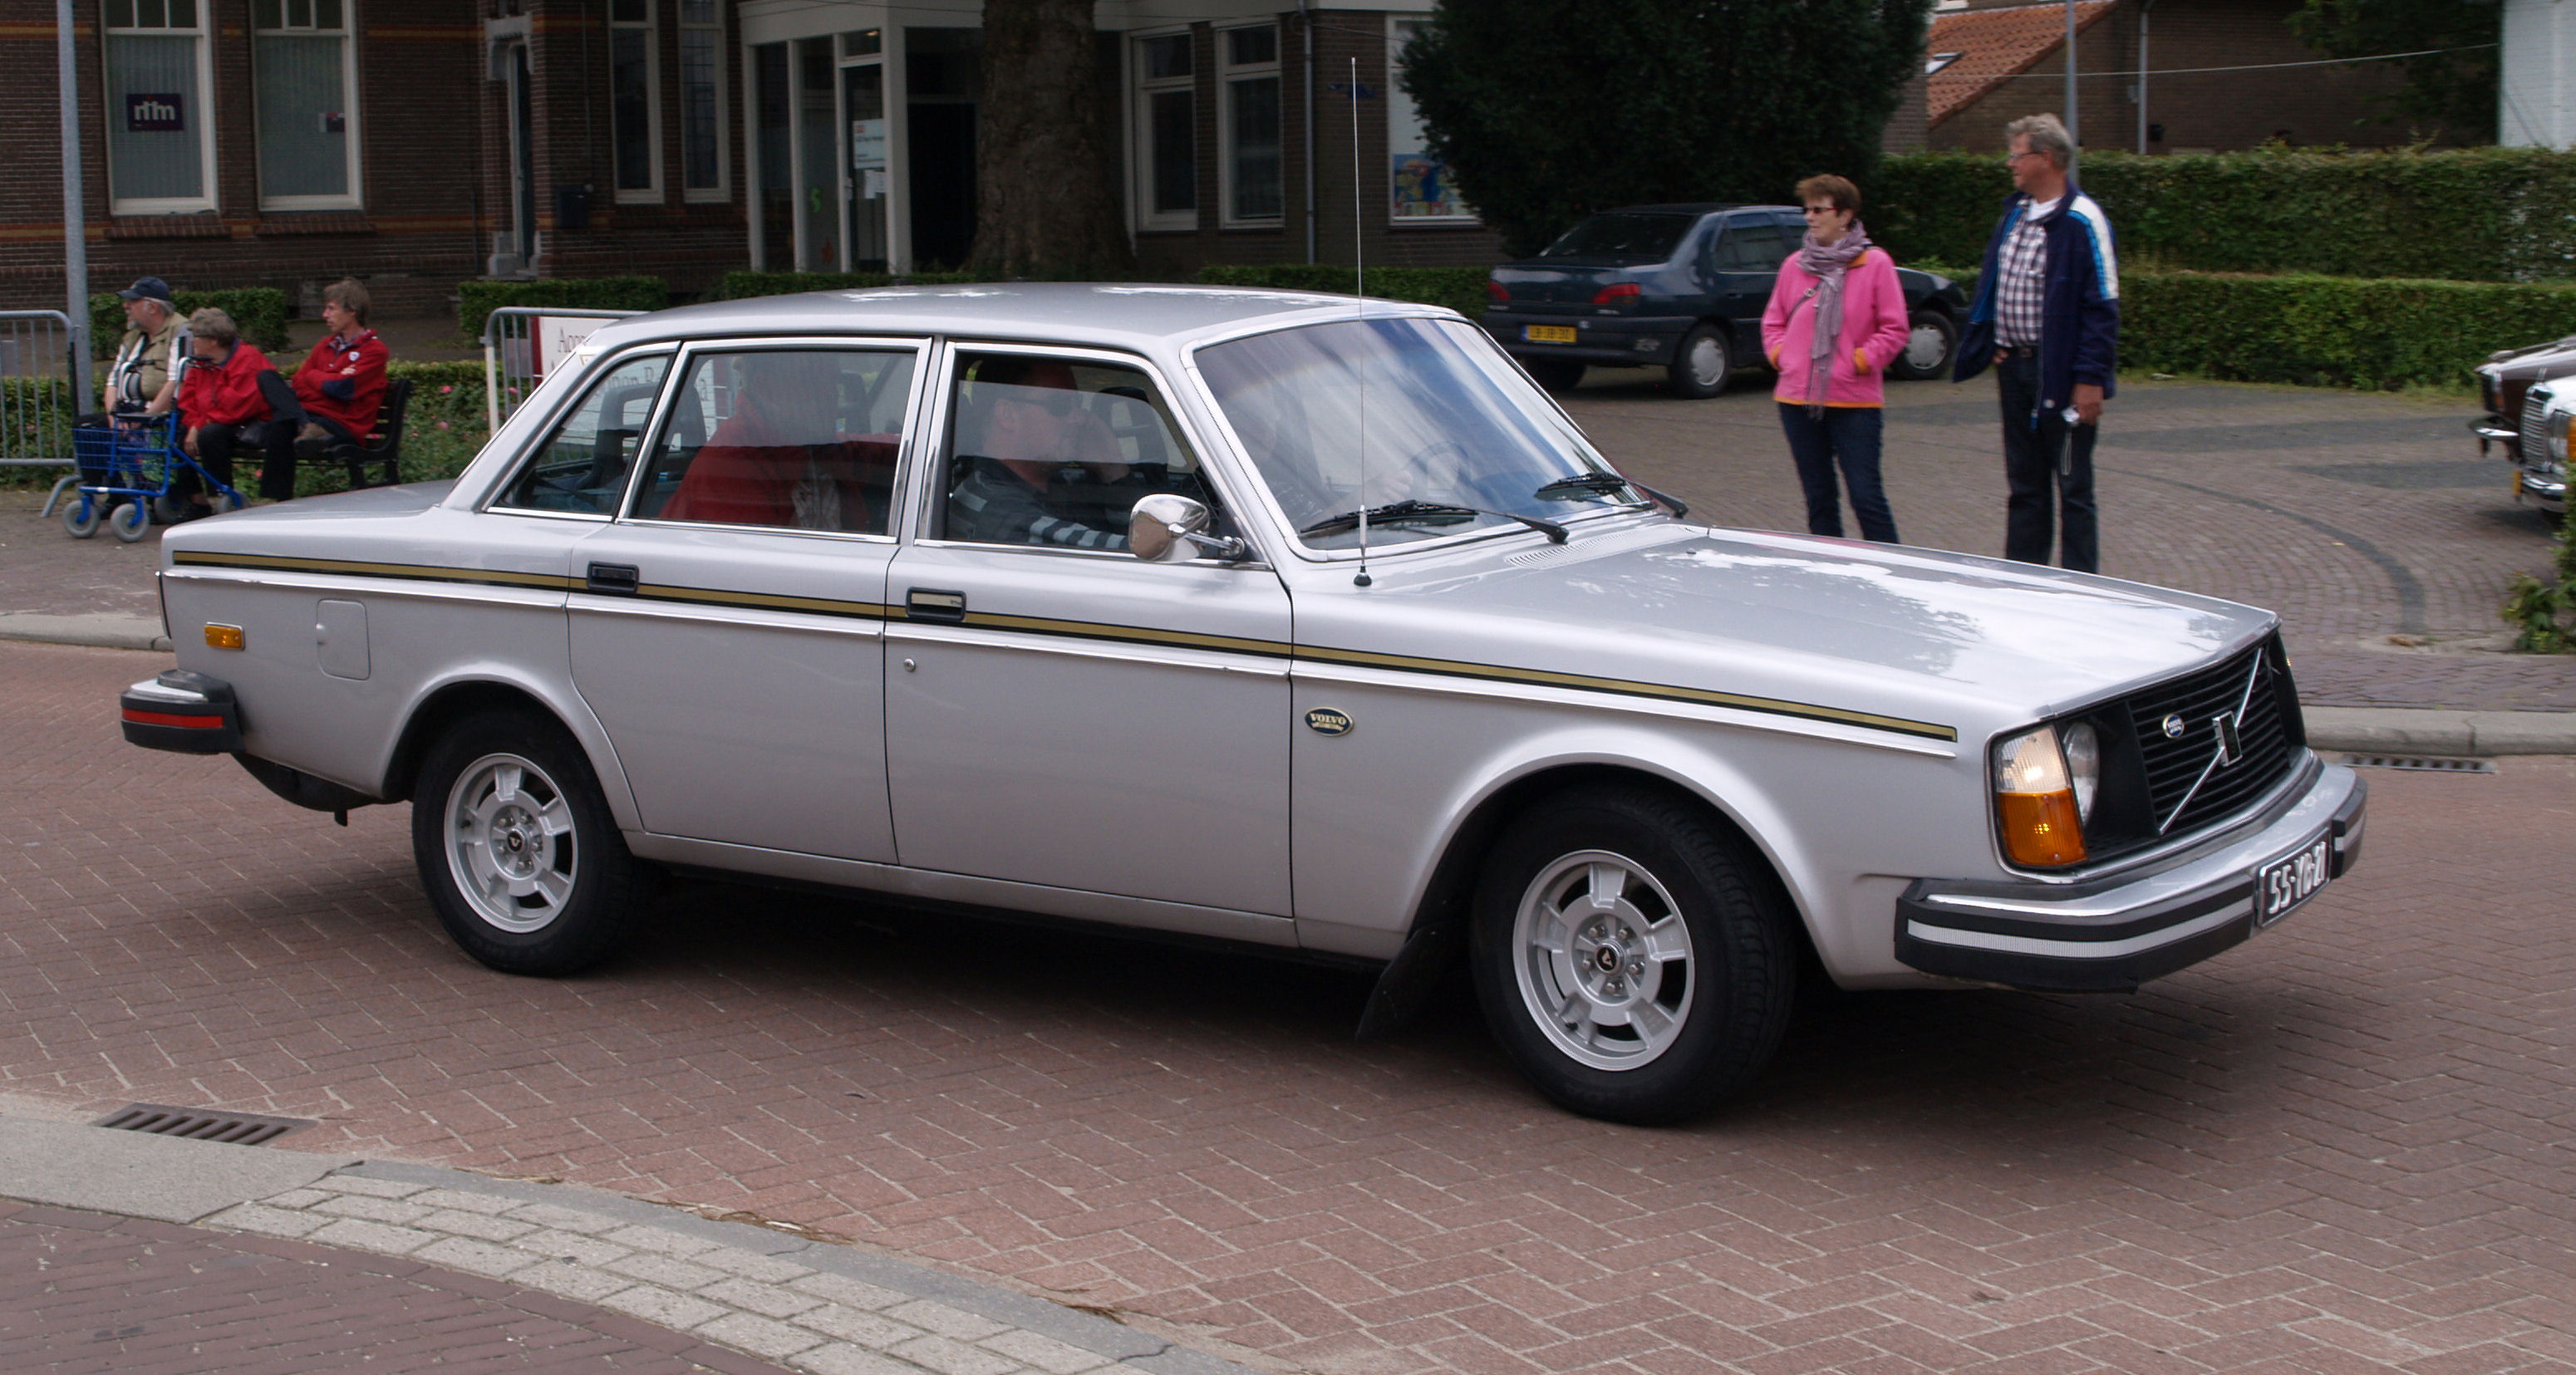 1977 Volvo 244 DL Jubileum model | Flickr - Photo Sharing!